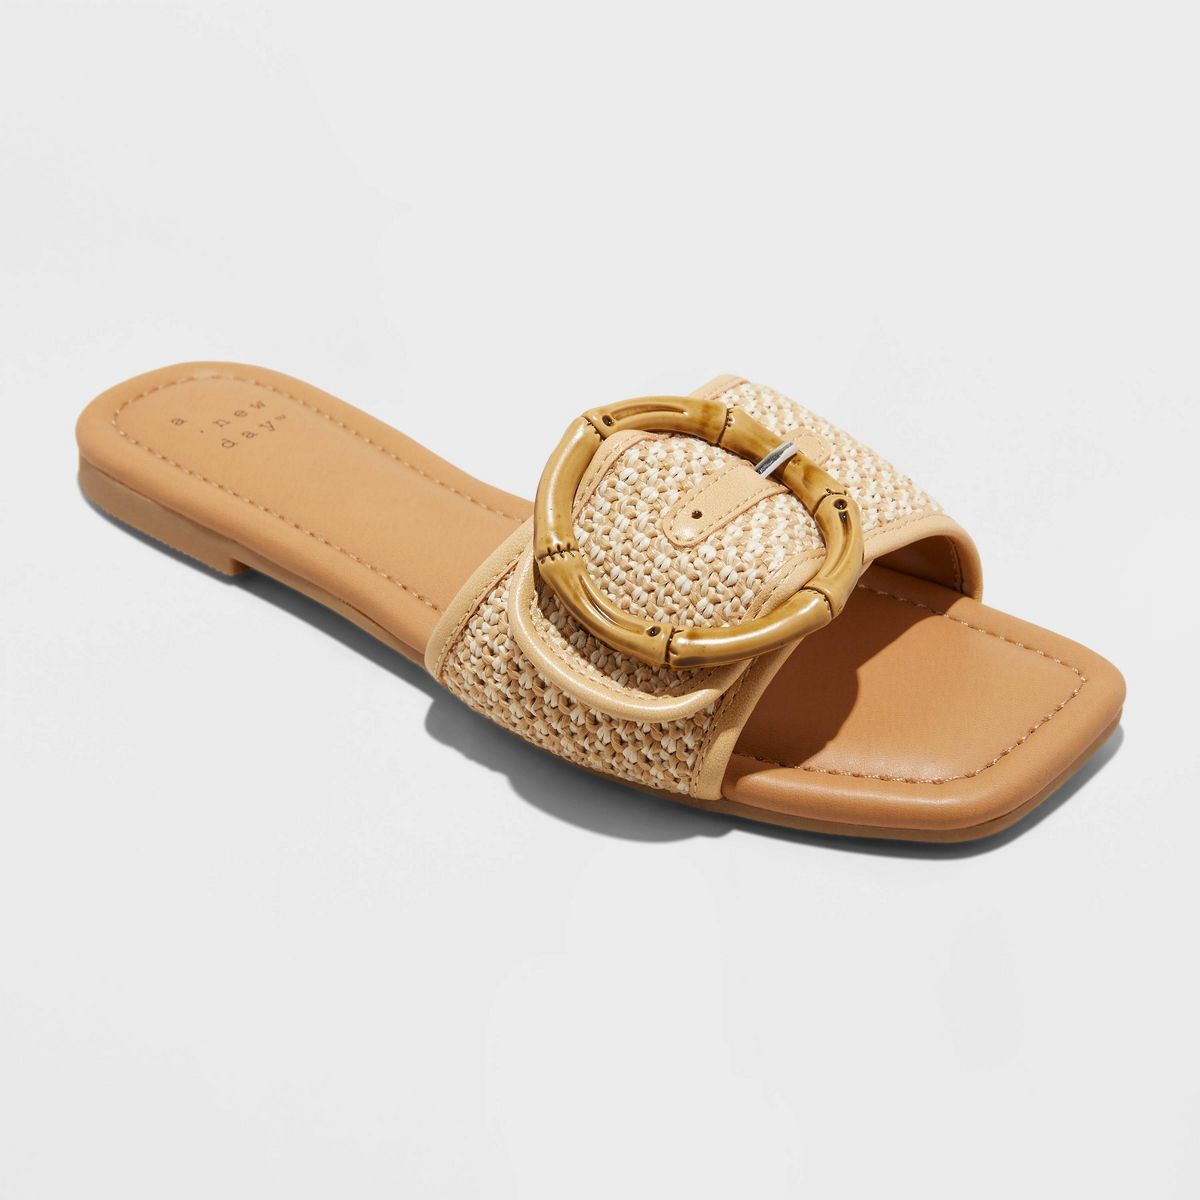 Women's Bennie Buckle Slide Sandals with Memory Foam Insole - A New Day™ Beige 5.5 | Target